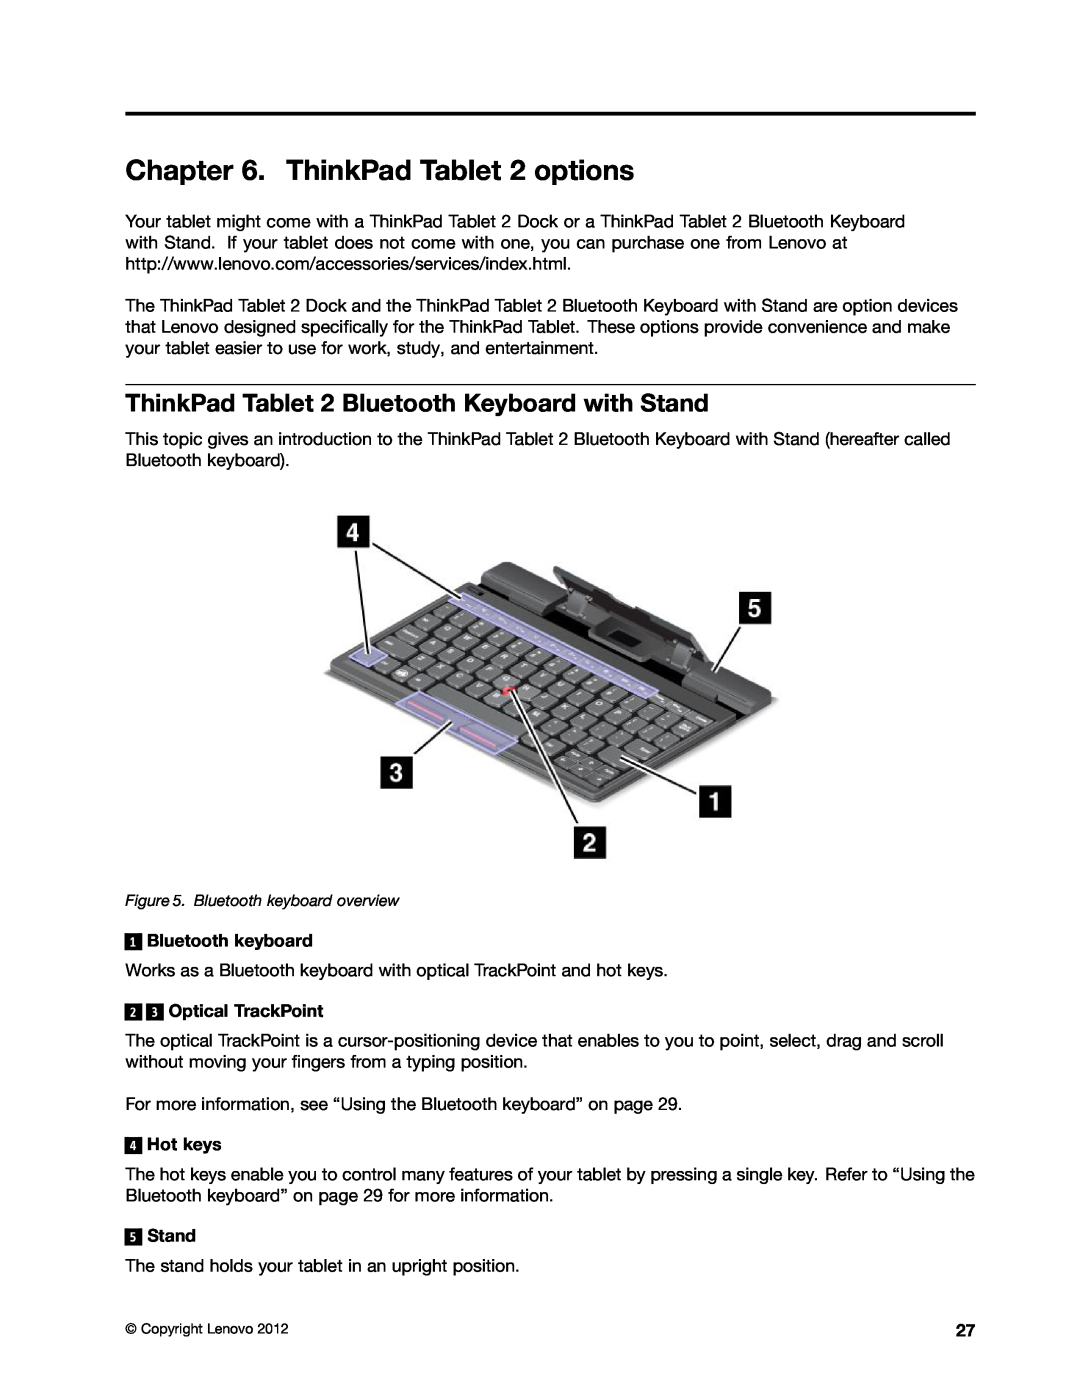 Lenovo 368222U ThinkPad Tablet 2 options, ThinkPad Tablet 2 Bluetooth Keyboard with Stand, Bluetooth keyboard, Hot keys 